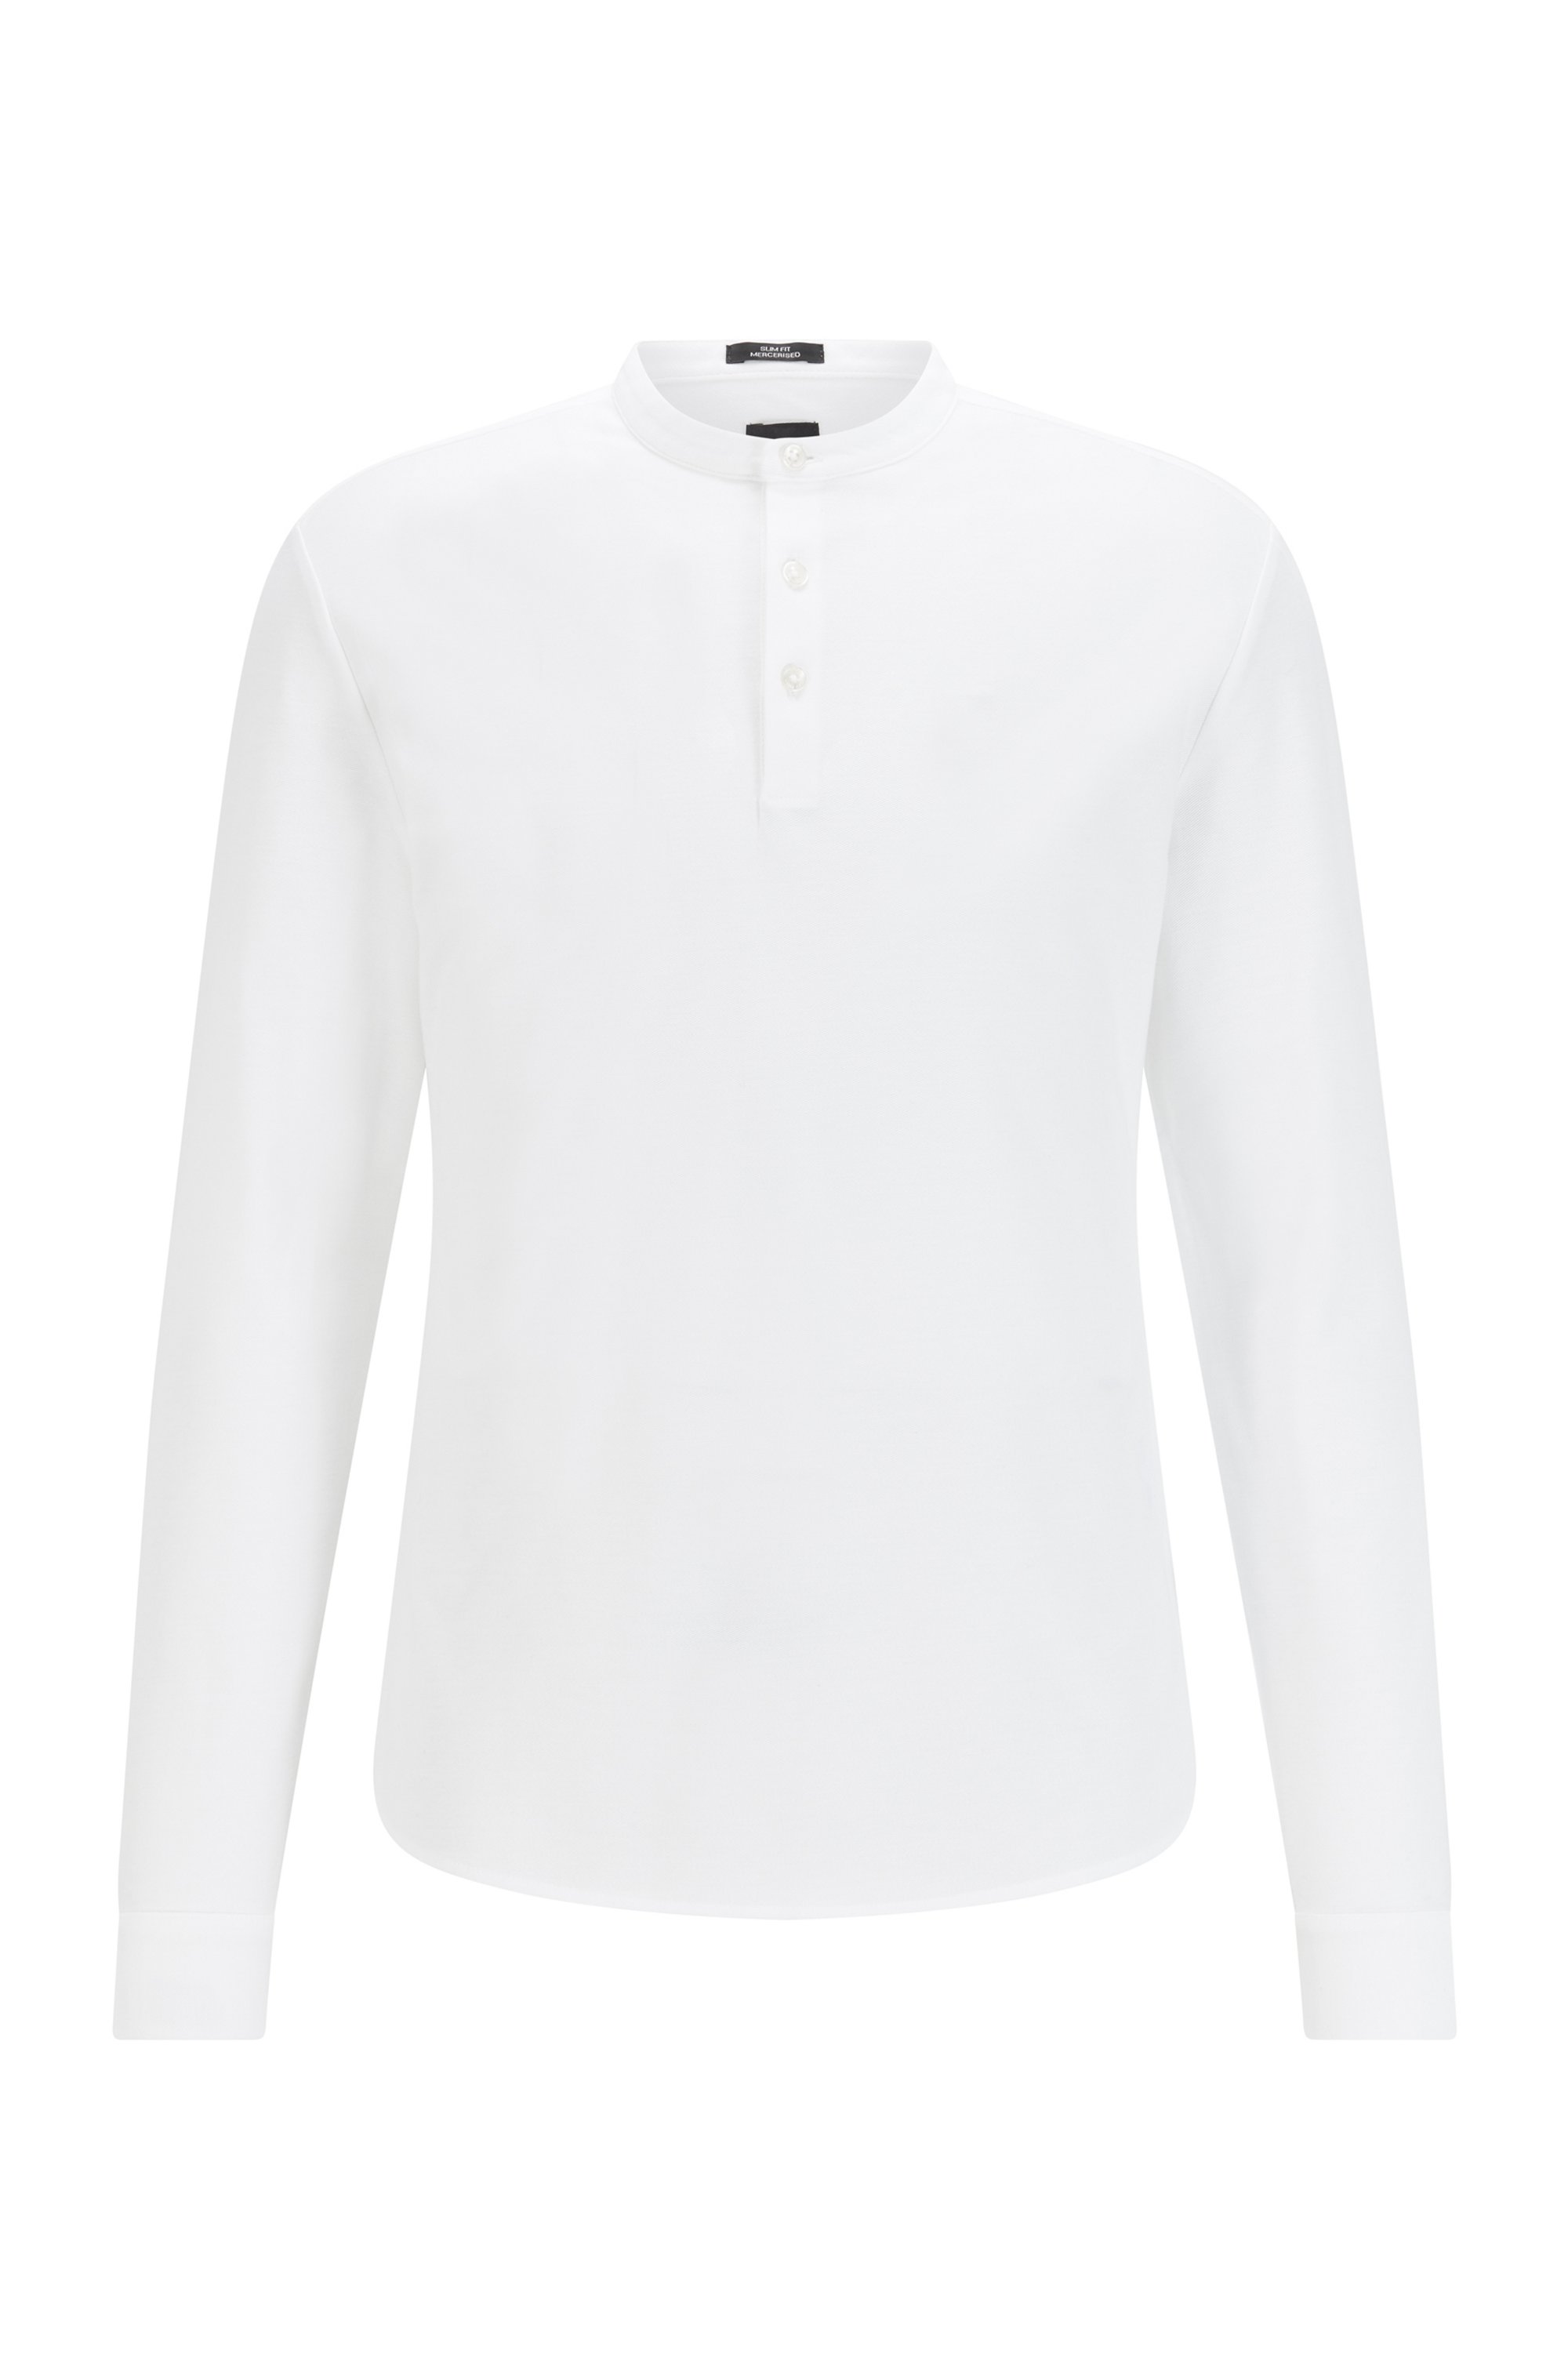 Slim-fit Henley shirt in mercerized cotton, White